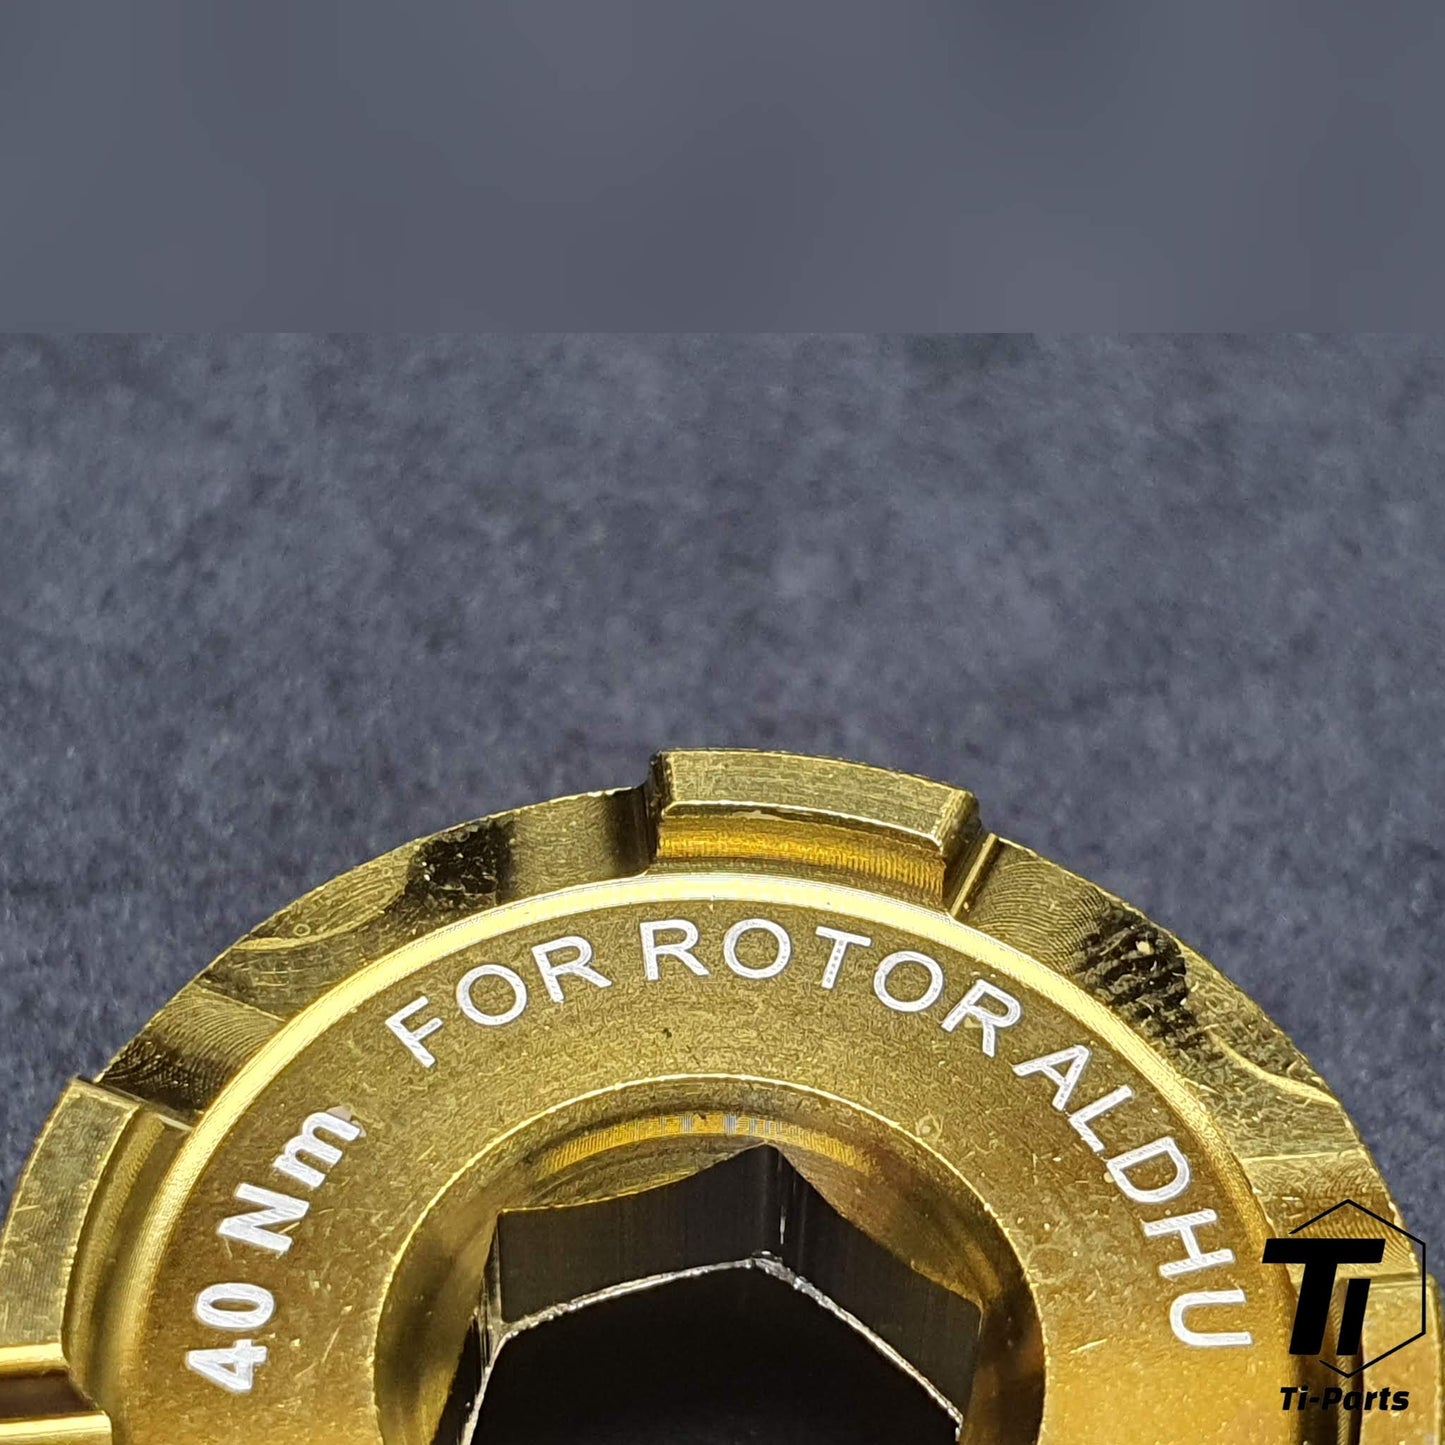 Rotor Aldhu 3D+ Titanium krankarmshætte | Carbon Spider kranksæt aero bolt Q Ring Power2max | Titanium skrue